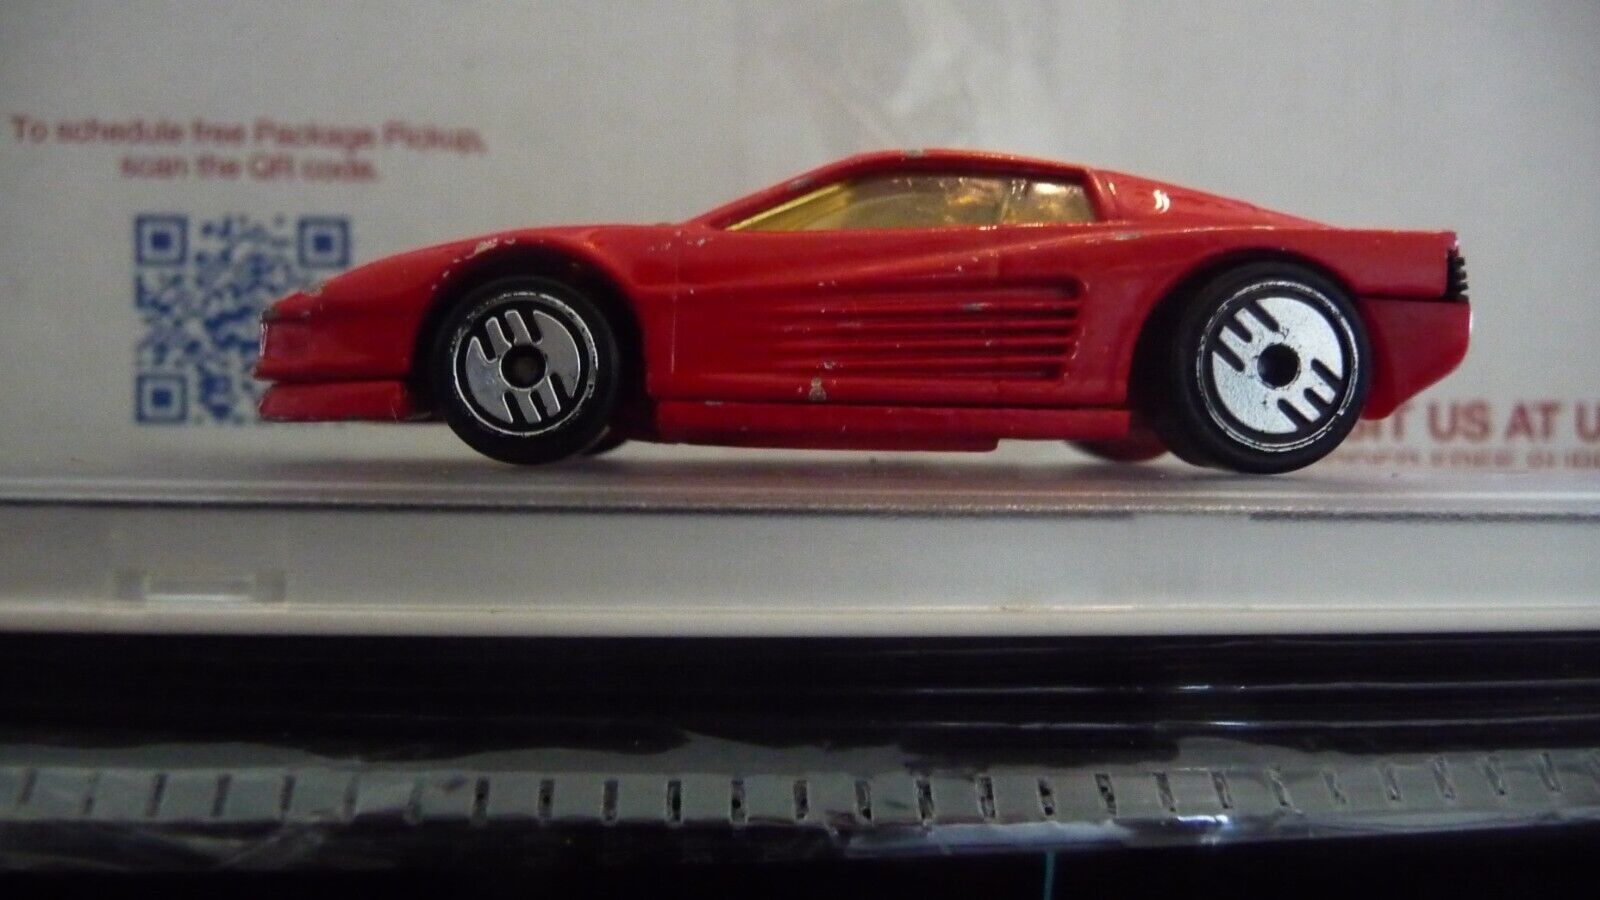 Vintage 1986 Mattel Hot Wheels Red Ferrari Testarossa Collectible Toy Car loose - $17.00